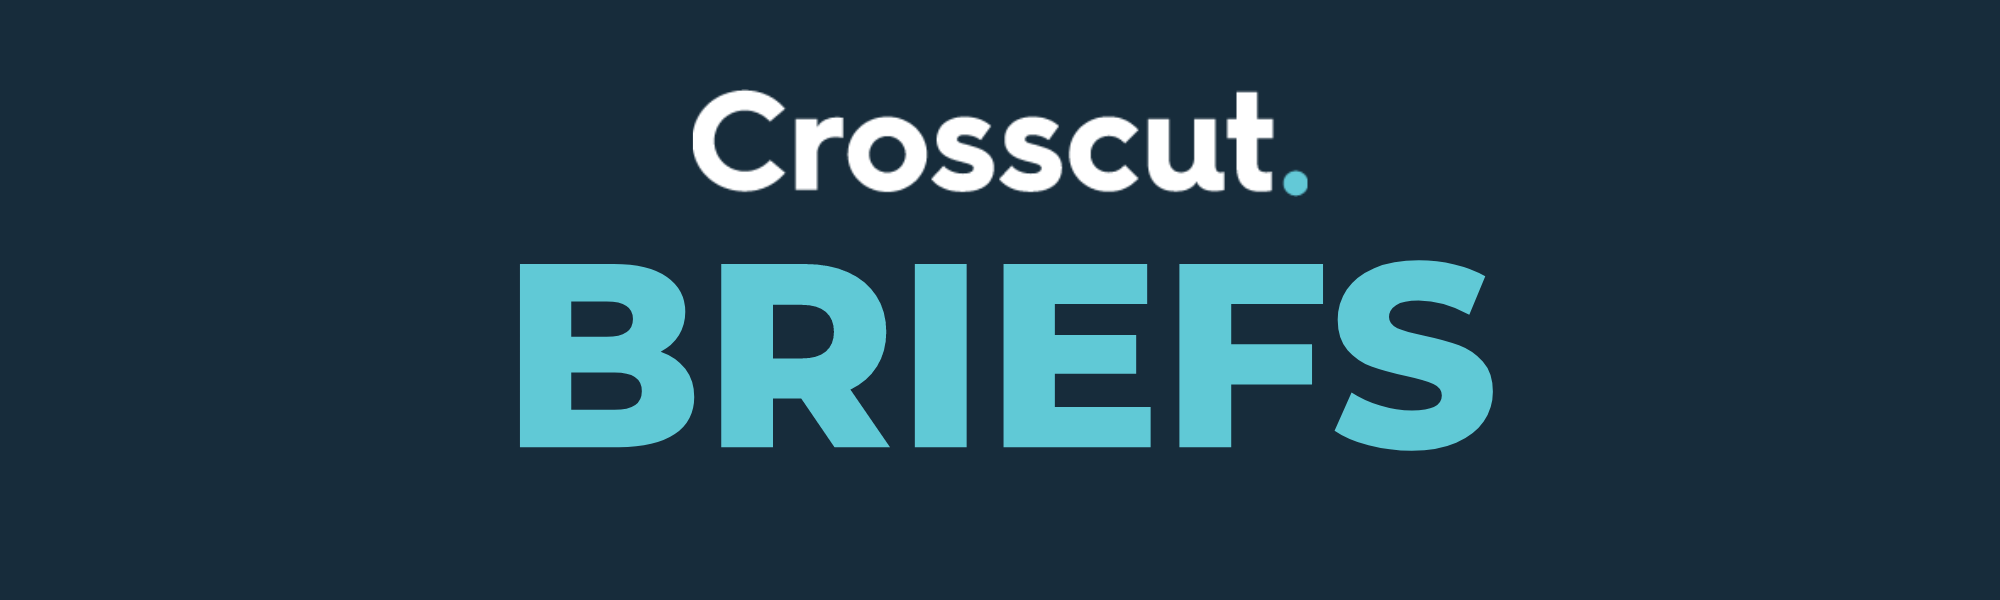 Crosscut Briefs